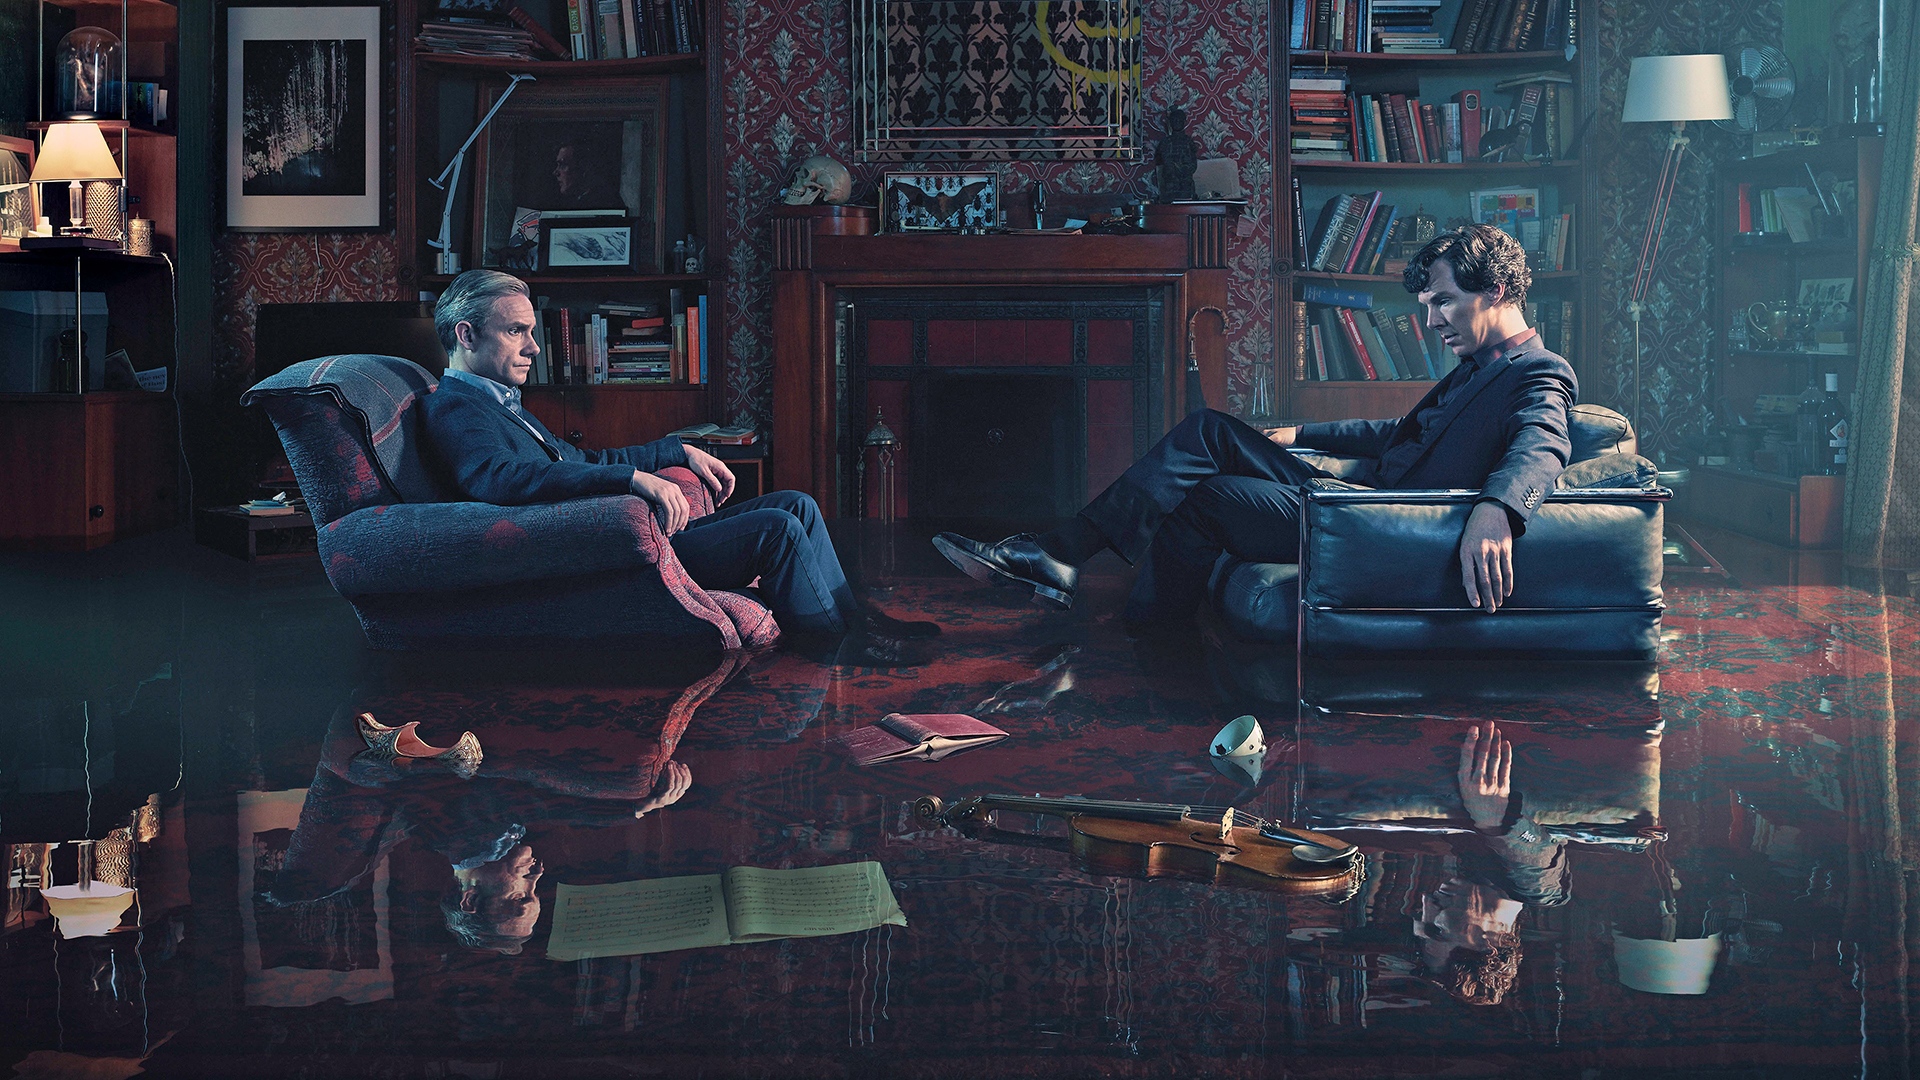 People 1920x1080 Sherlock Benedict Cumberbatch Martin Freeman violin skull detectives Netflix BBC TV series musical instrument